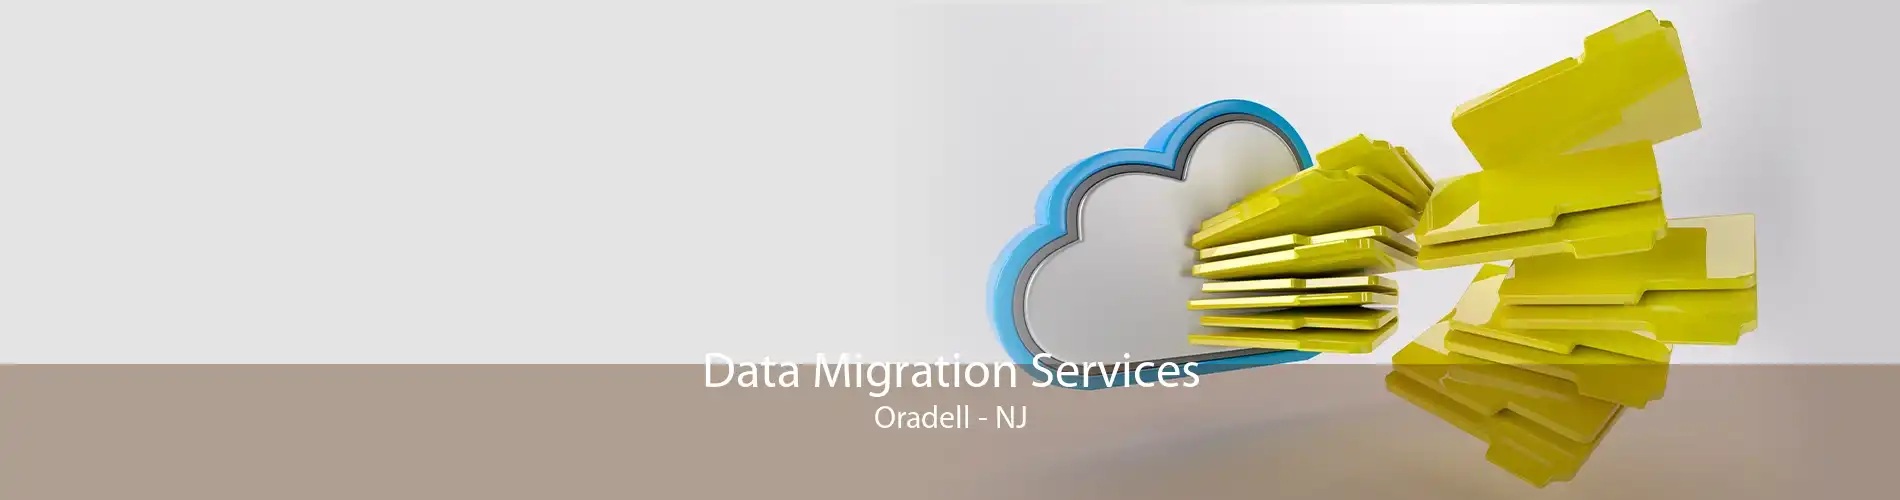 Data Migration Services Oradell - NJ